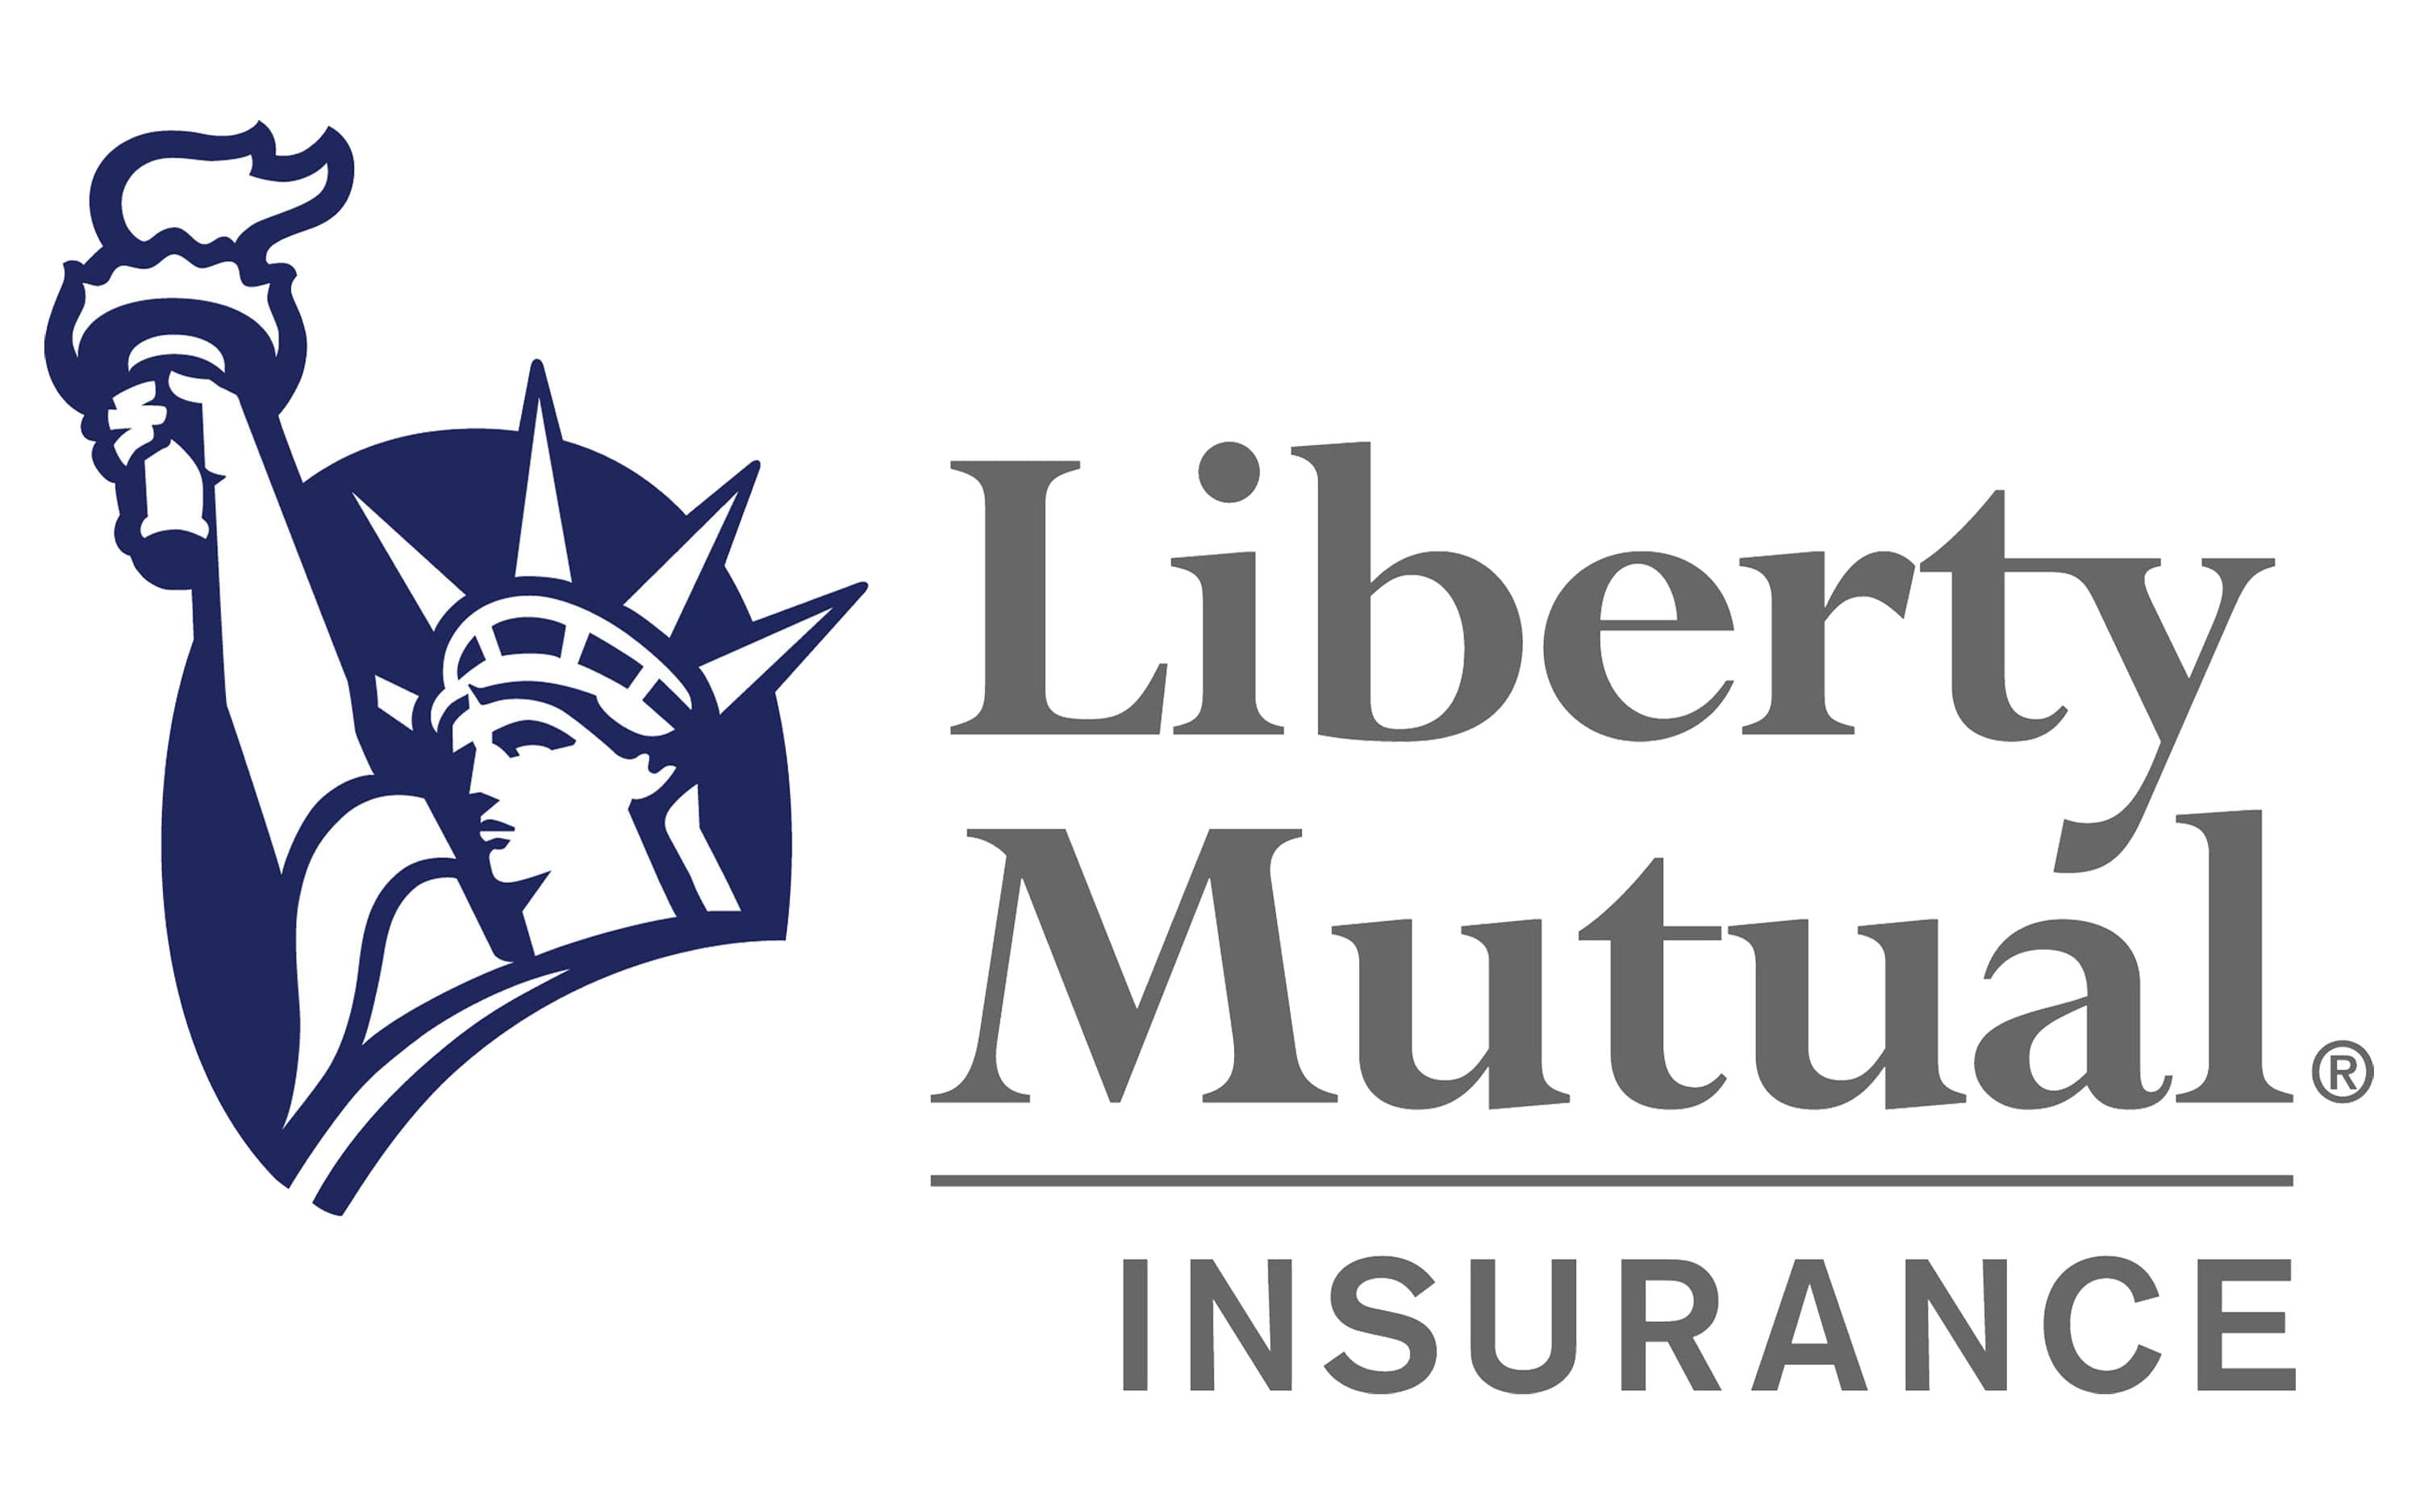 travel trailer insurance liberty mutual